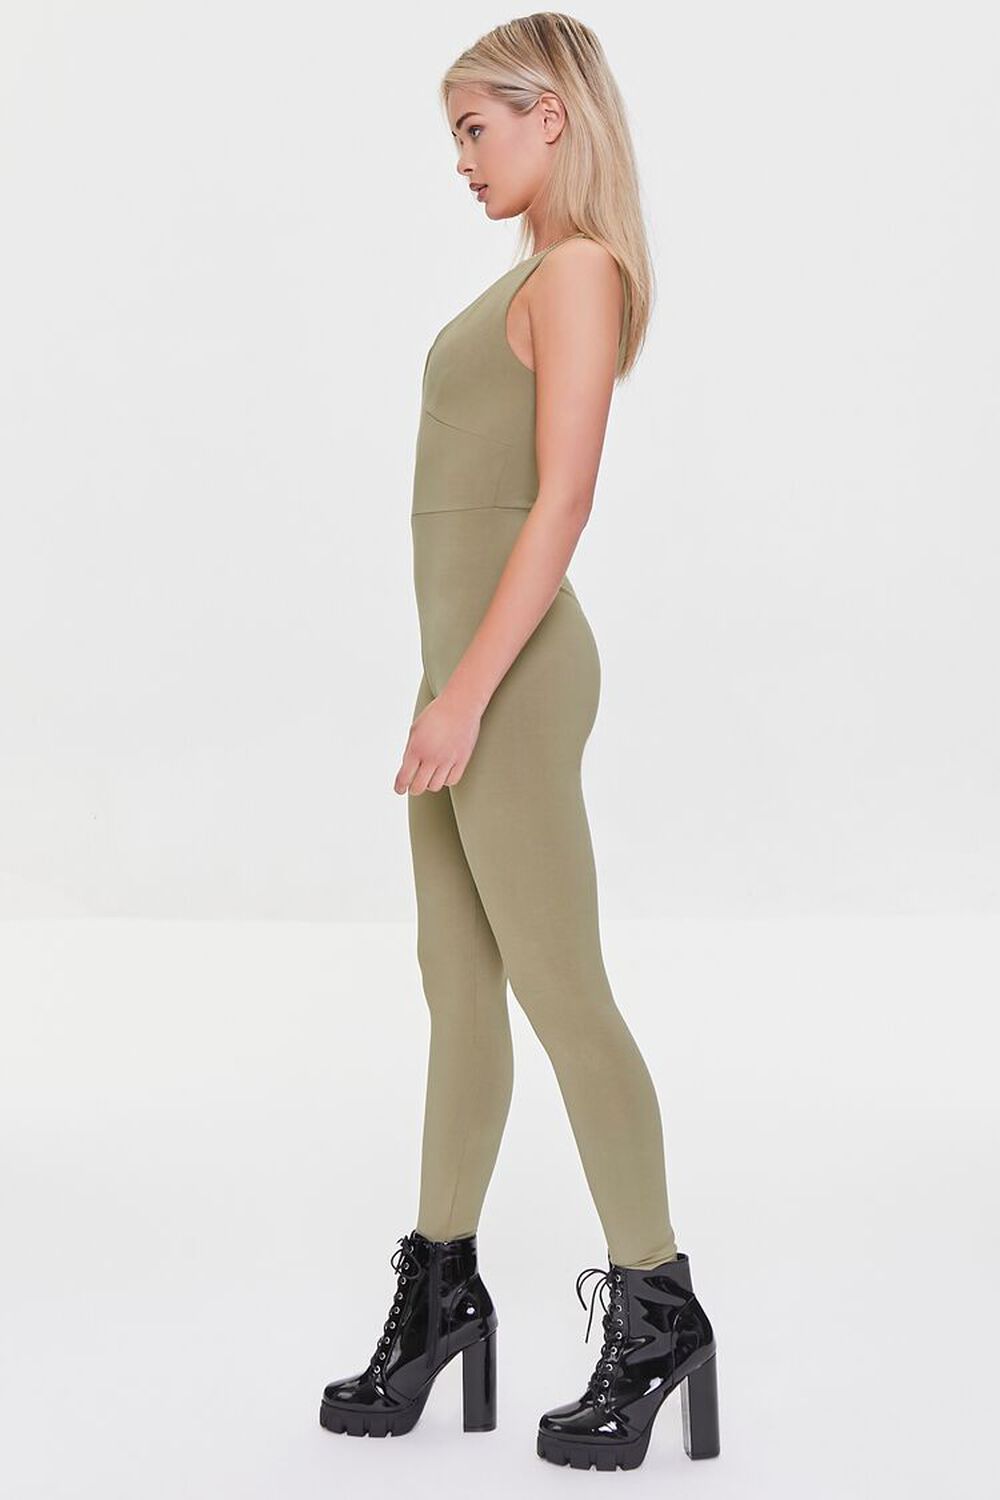 OLIVE Plunging Form-Fitting Jumpsuit, image 2